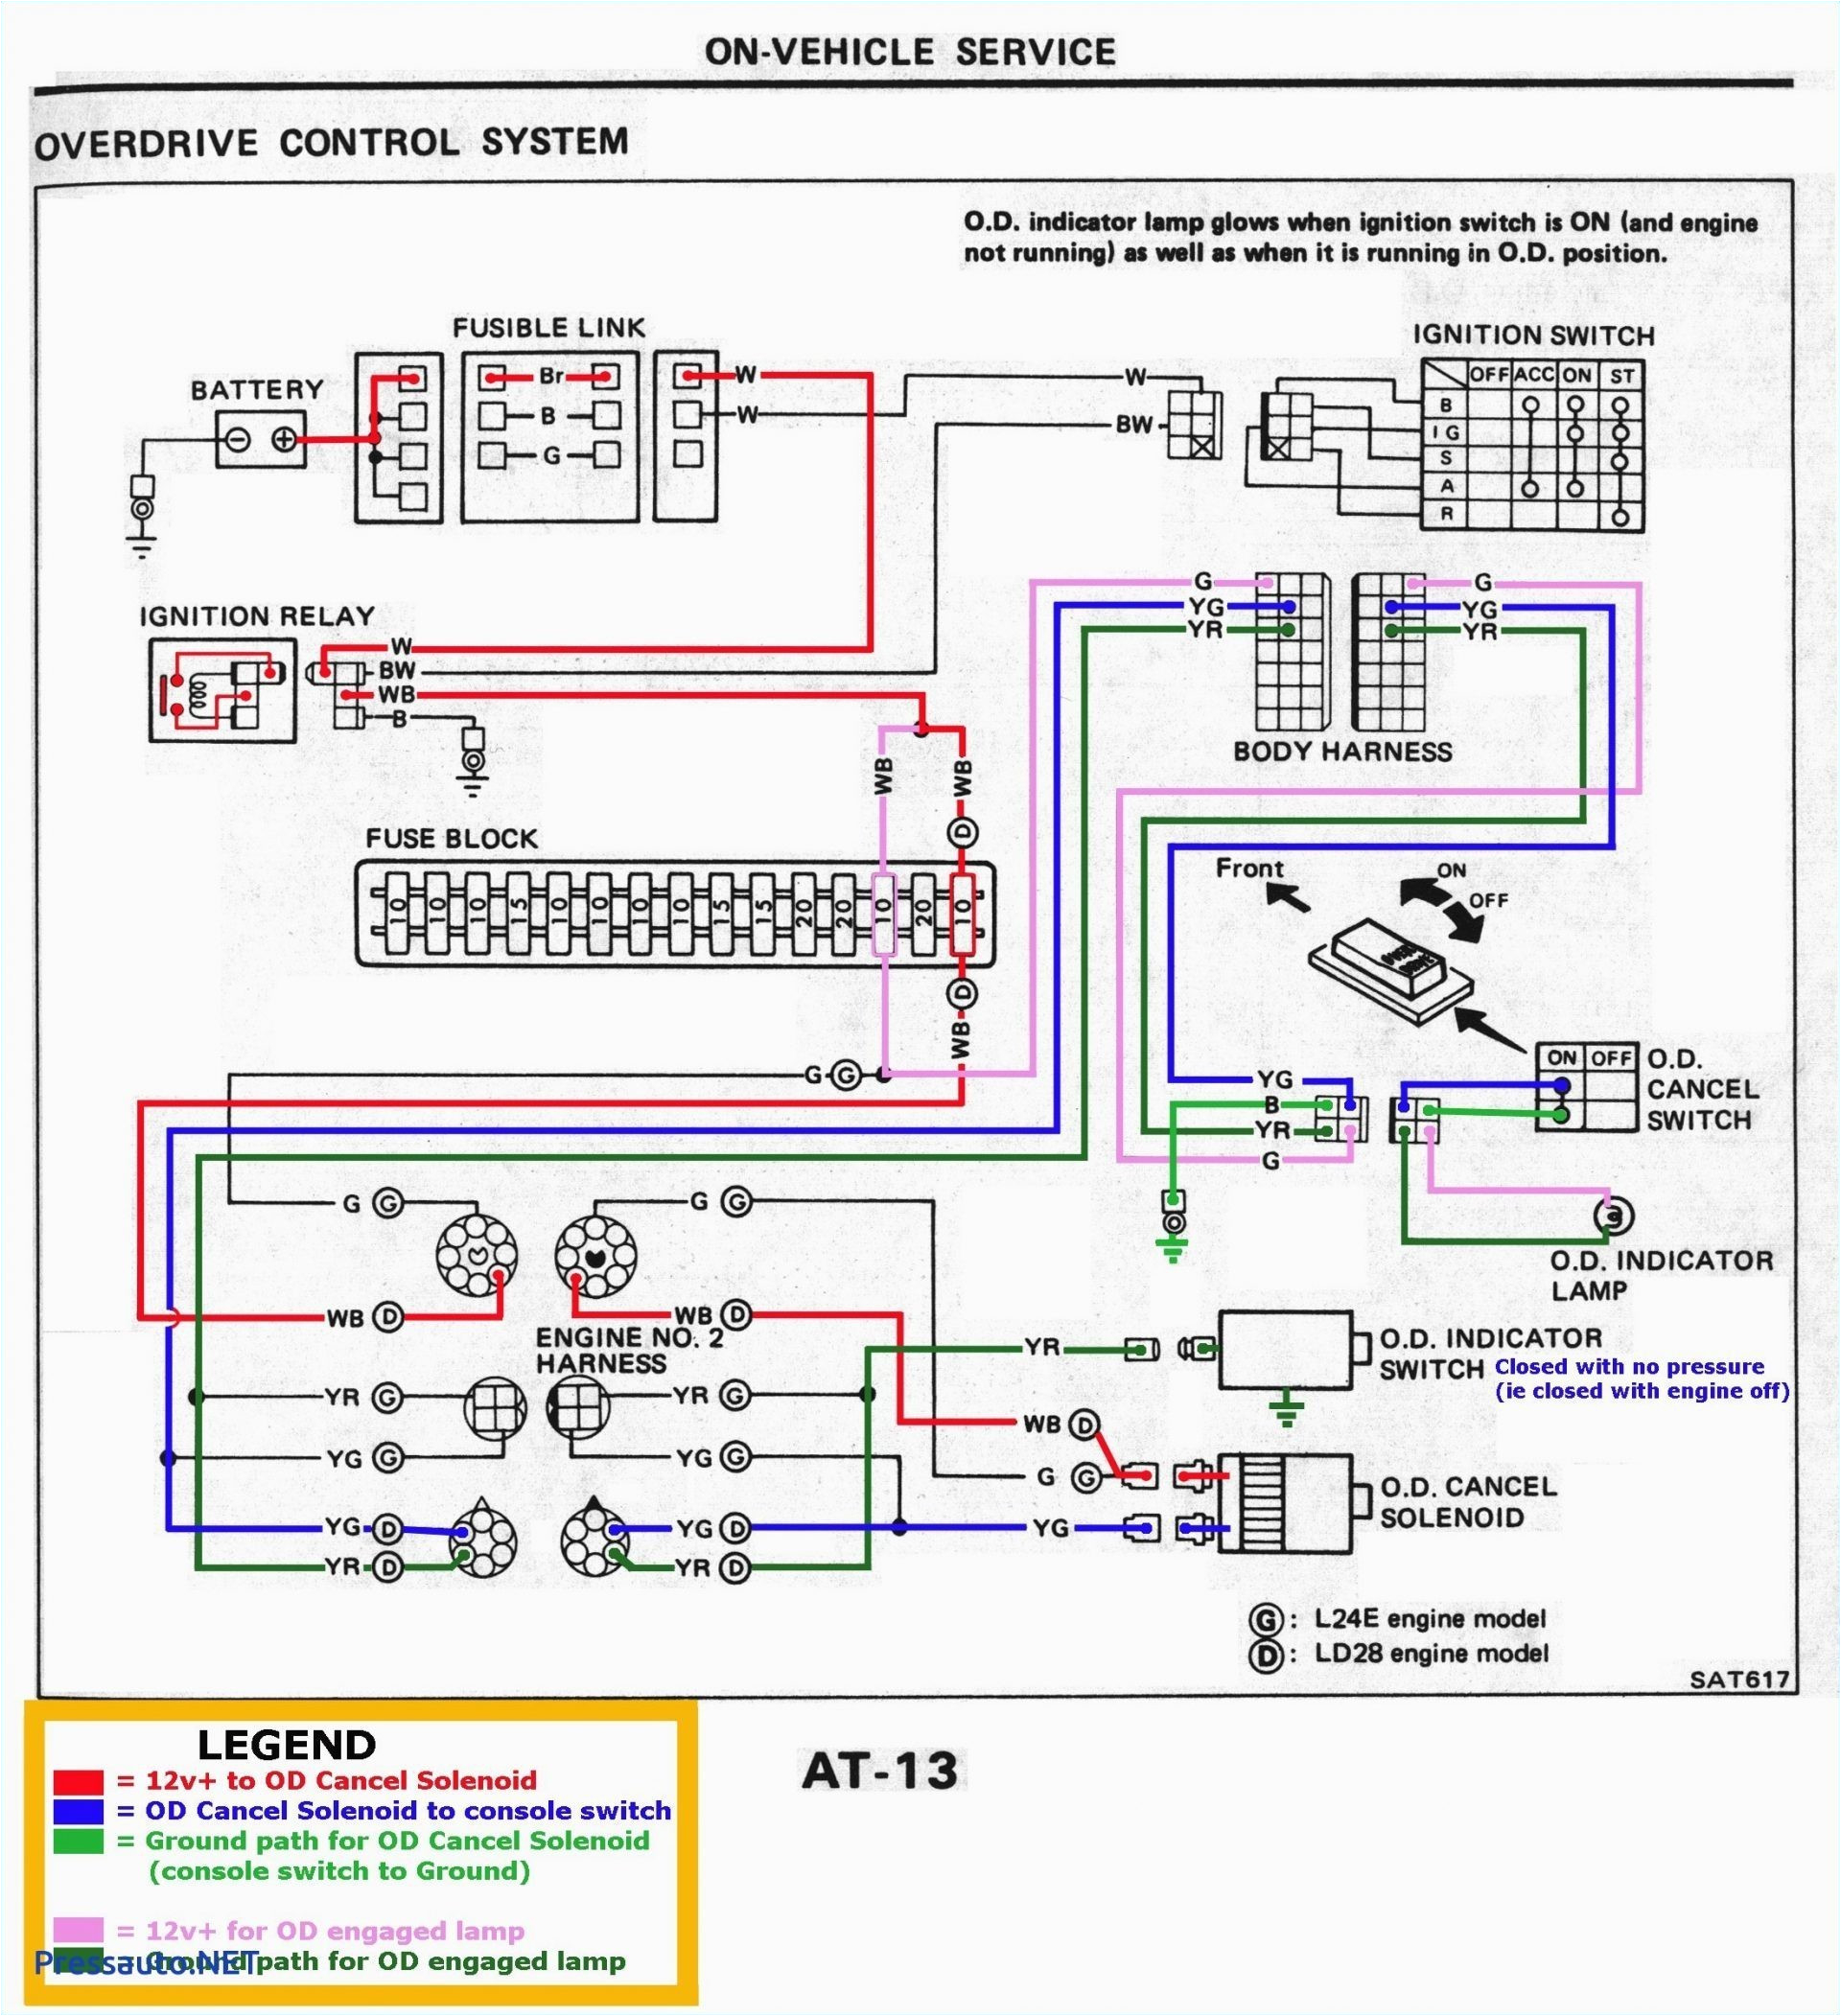 fan diagram wiring harness chrysler jeep wiring diagrams show also electric fan wiring harness kits furthermore 2008 chrysler